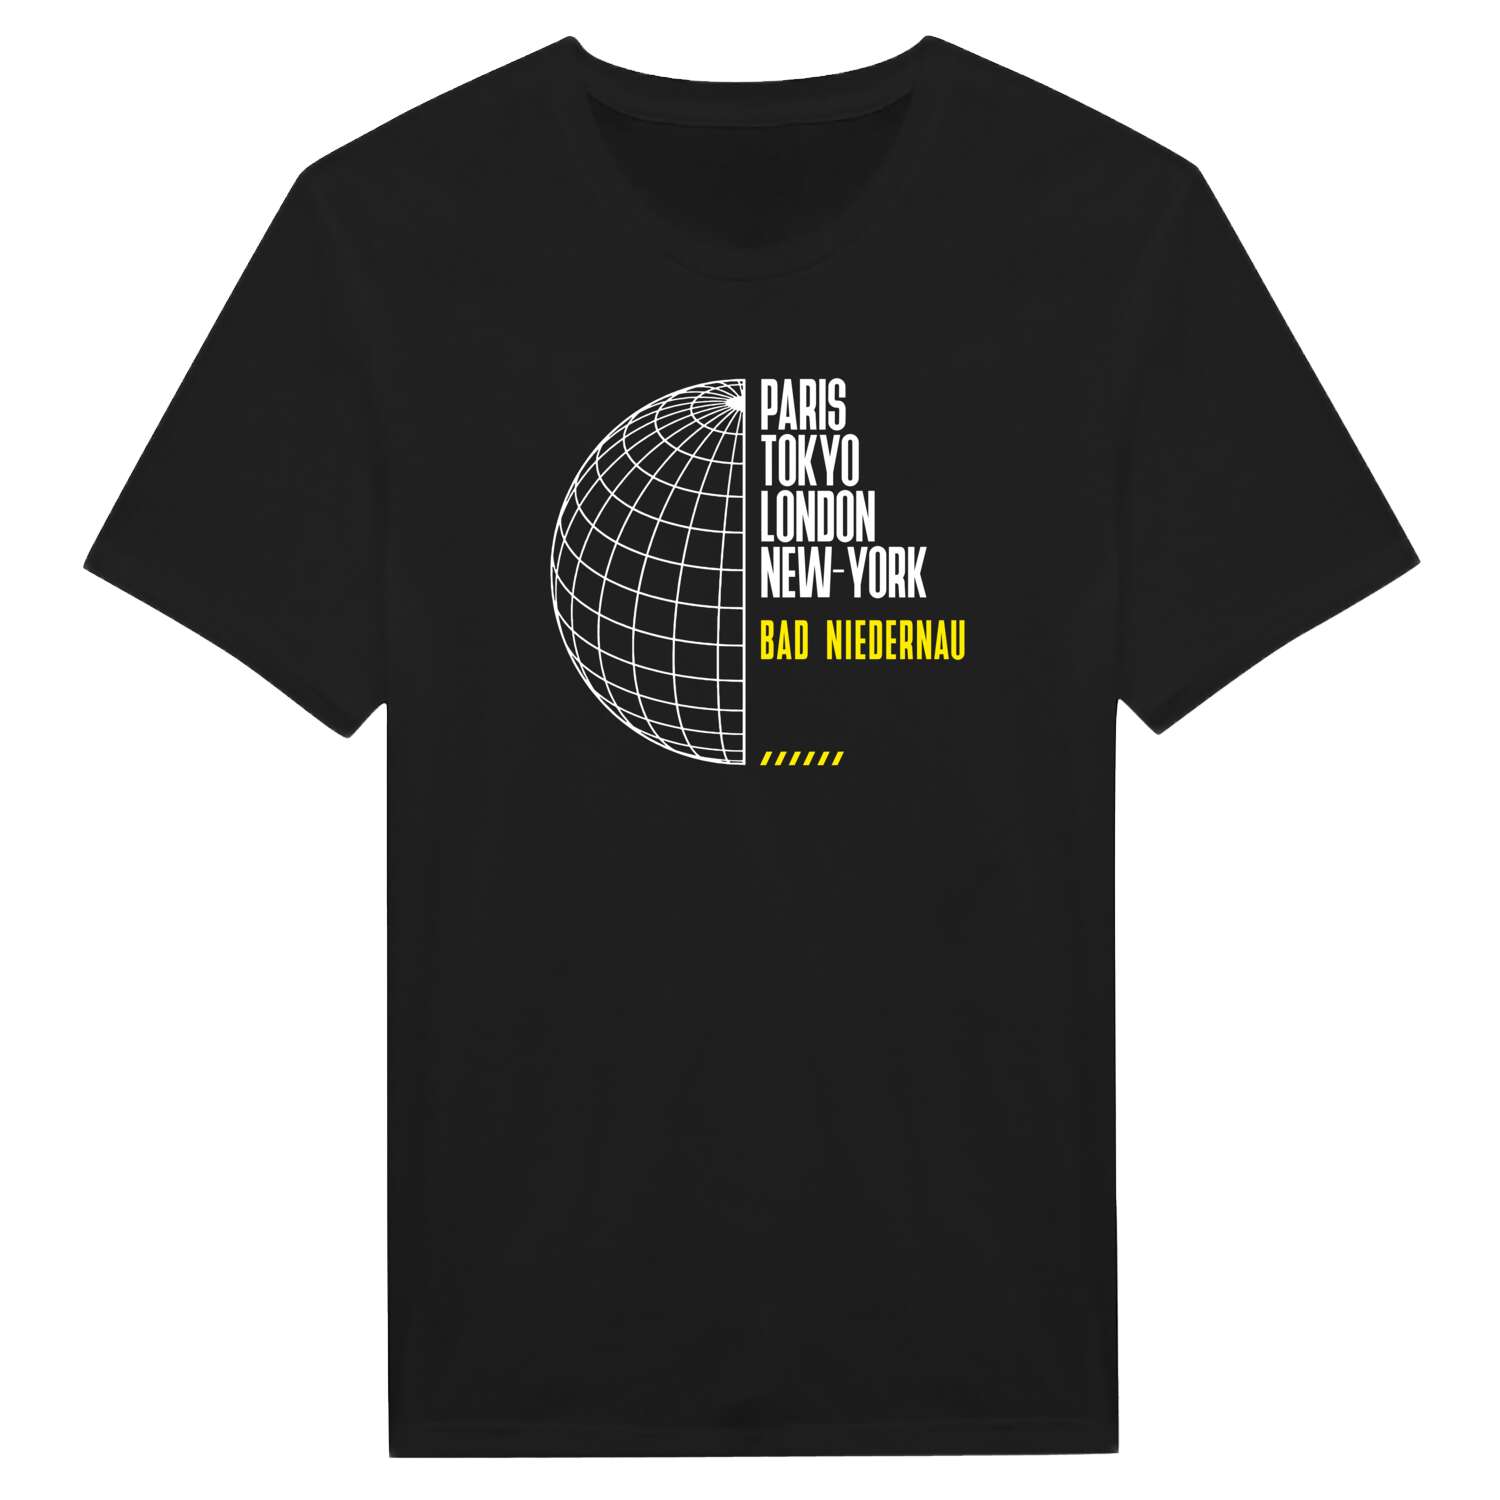 Bad Niedernau T-Shirt »Paris Tokyo London«